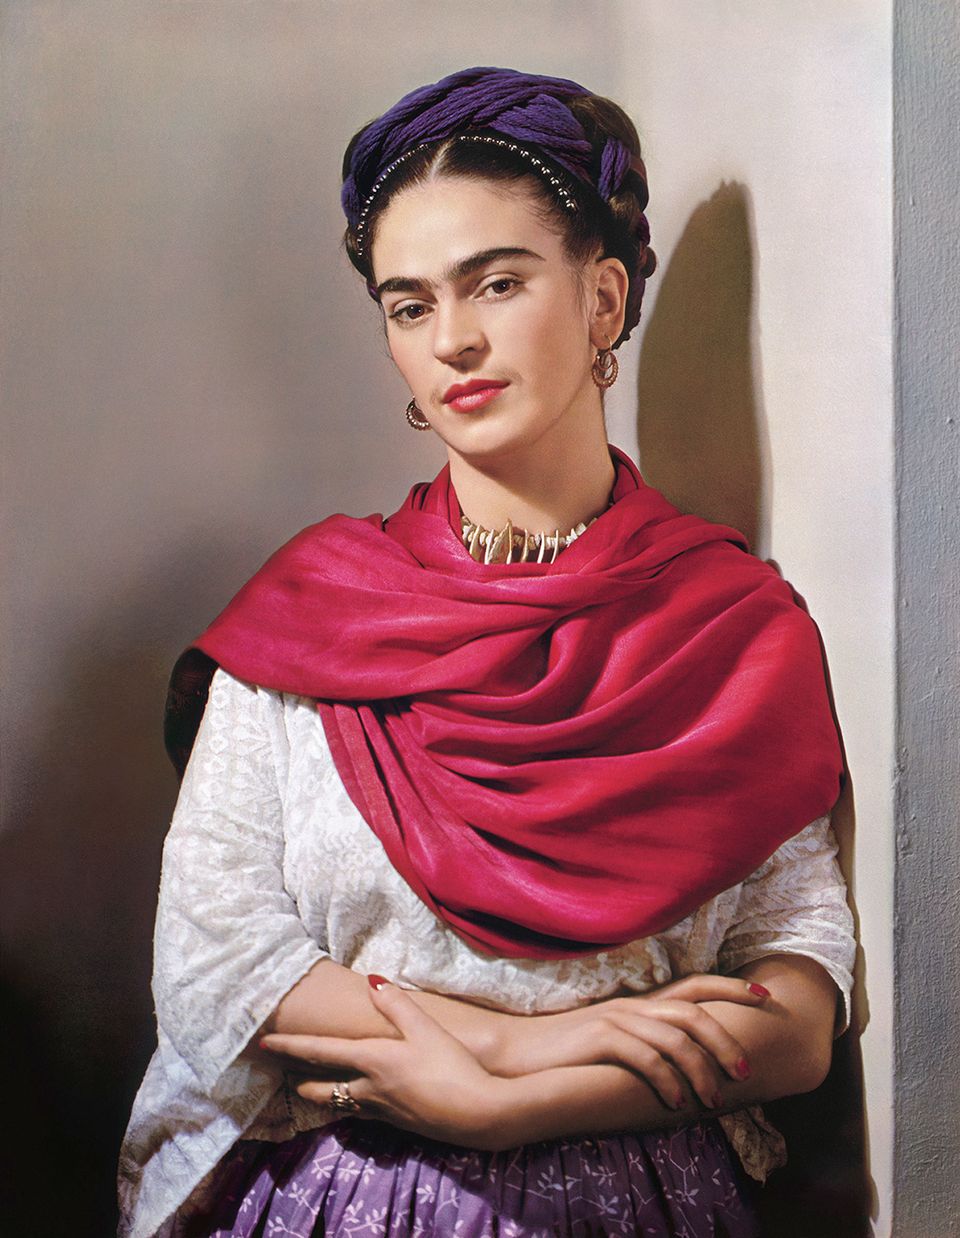 An image of Frida Kahlo